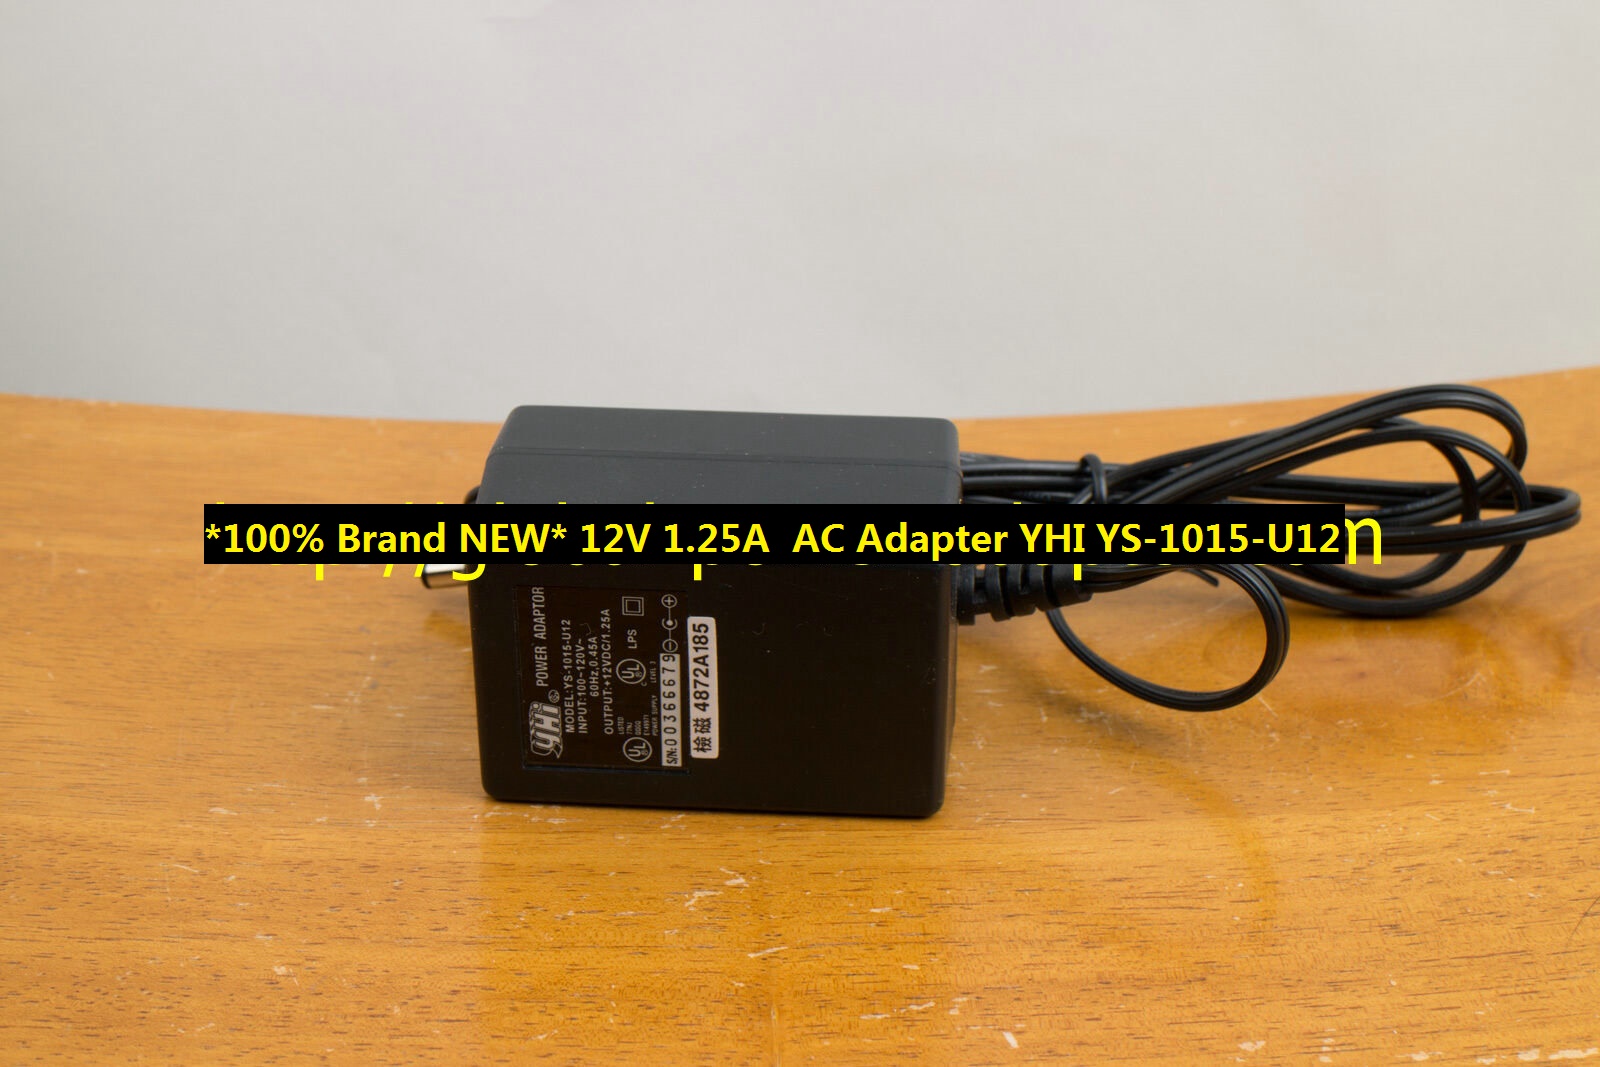 *100% Brand NEW* AC Adapter 12V 1.25A YHI YS-1015-U12 HP ScanJet 2300C 3400C 3400Cxi 4300C 4300Cse 5 - Click Image to Close